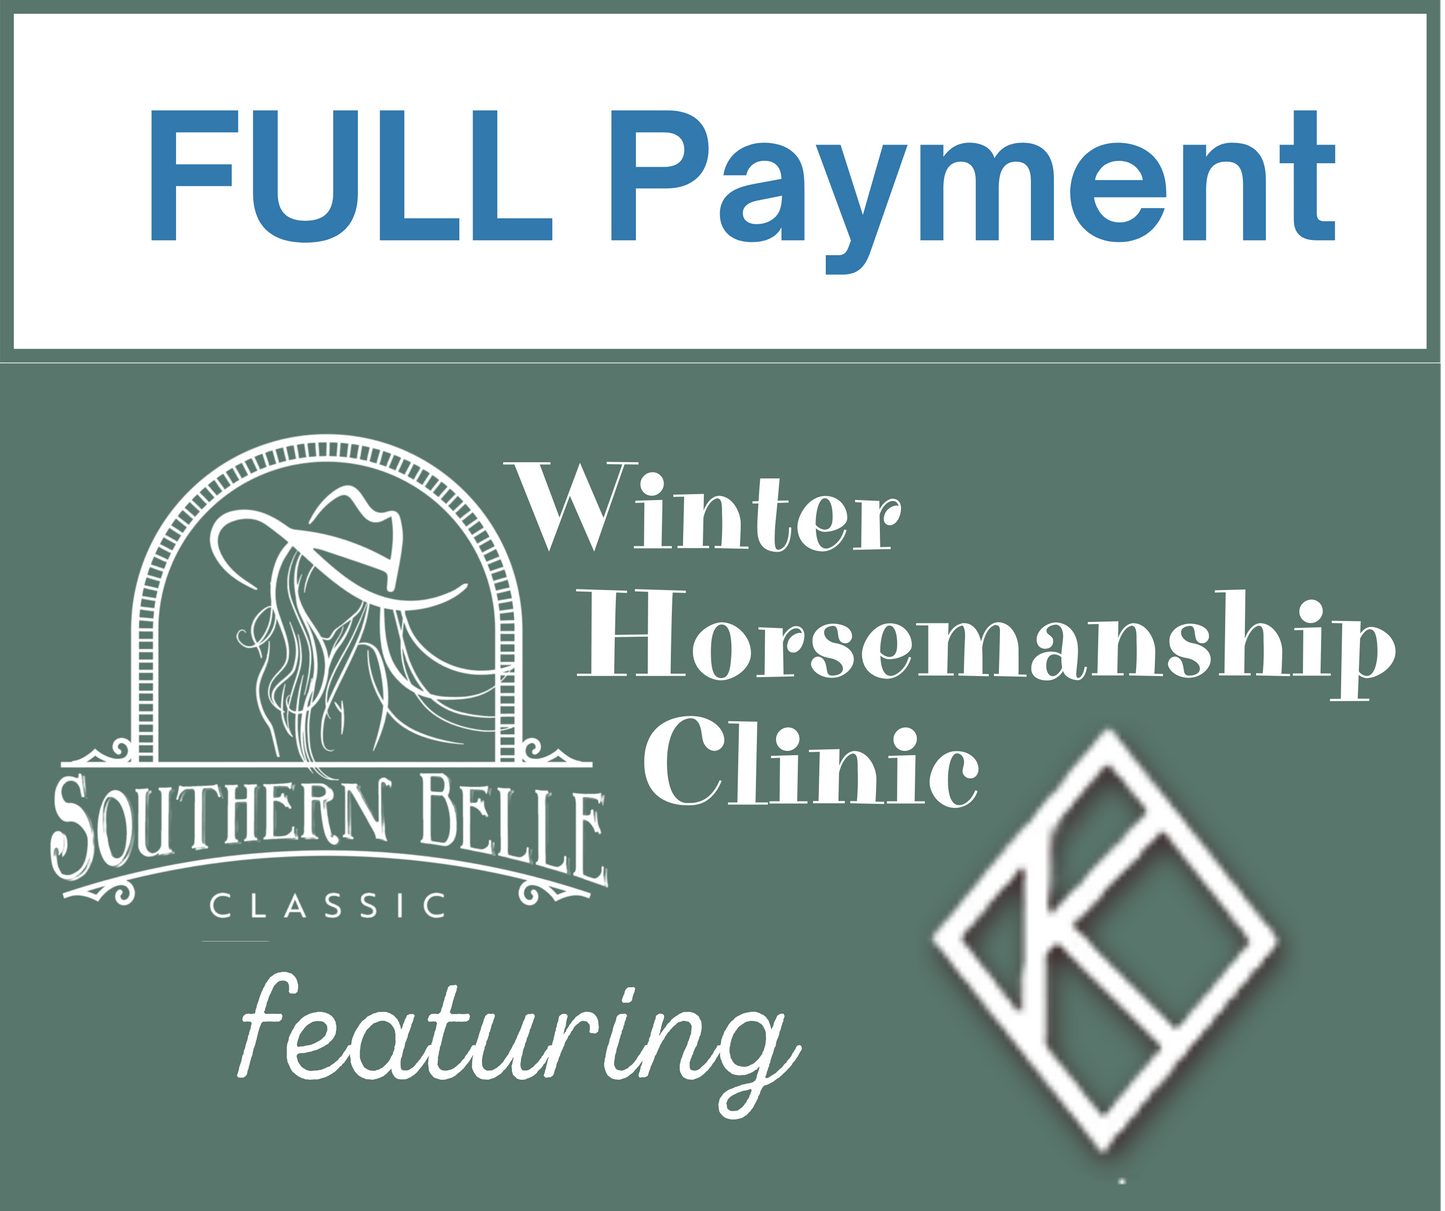 Winter Horsemanship Clinic with Diamond K  RIDER Registration FULL Payment